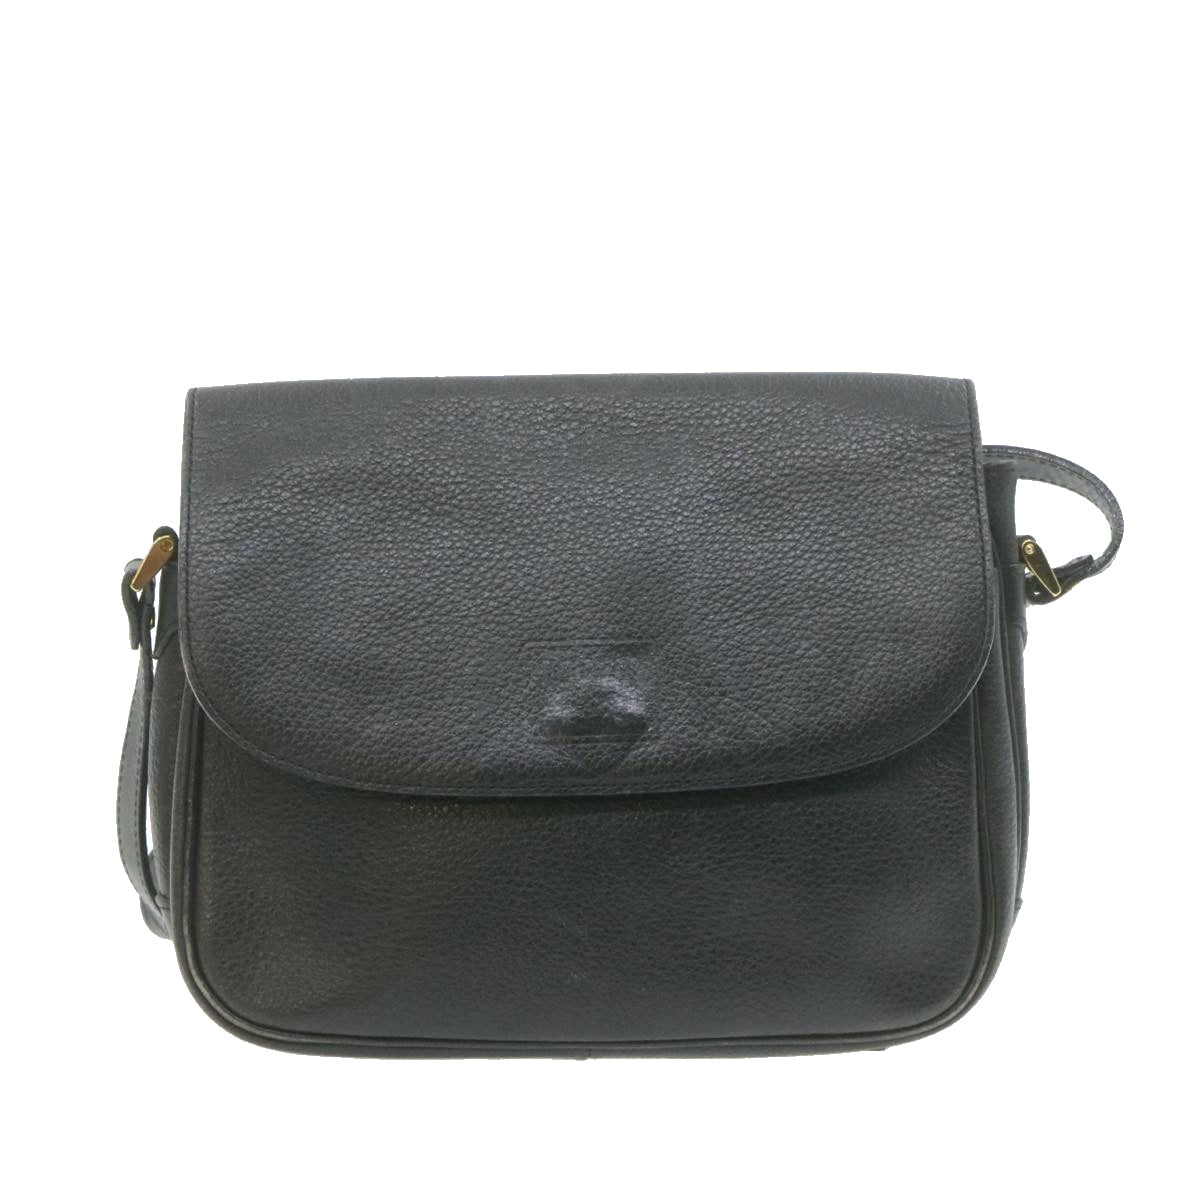 Burberrys Nova Check Shoulder Bag Leather Black Auth am636g - 0